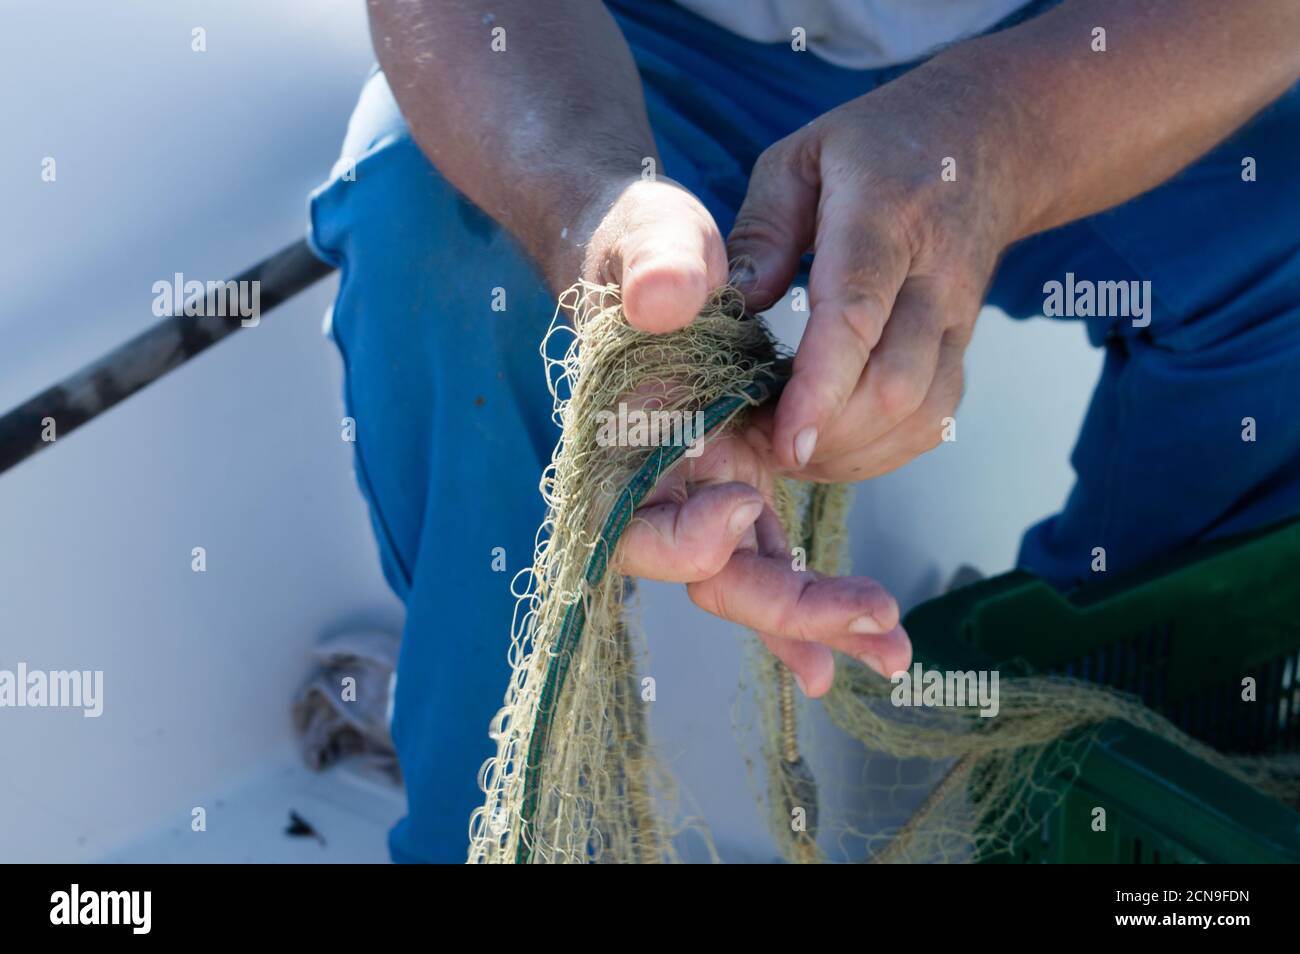 https://c8.alamy.com/comp/2CN9FDN/fisherman-holding-an-old-fishing-net-small-traditional-croatian-fishing-from-dalmatia-croatia-2CN9FDN.jpg